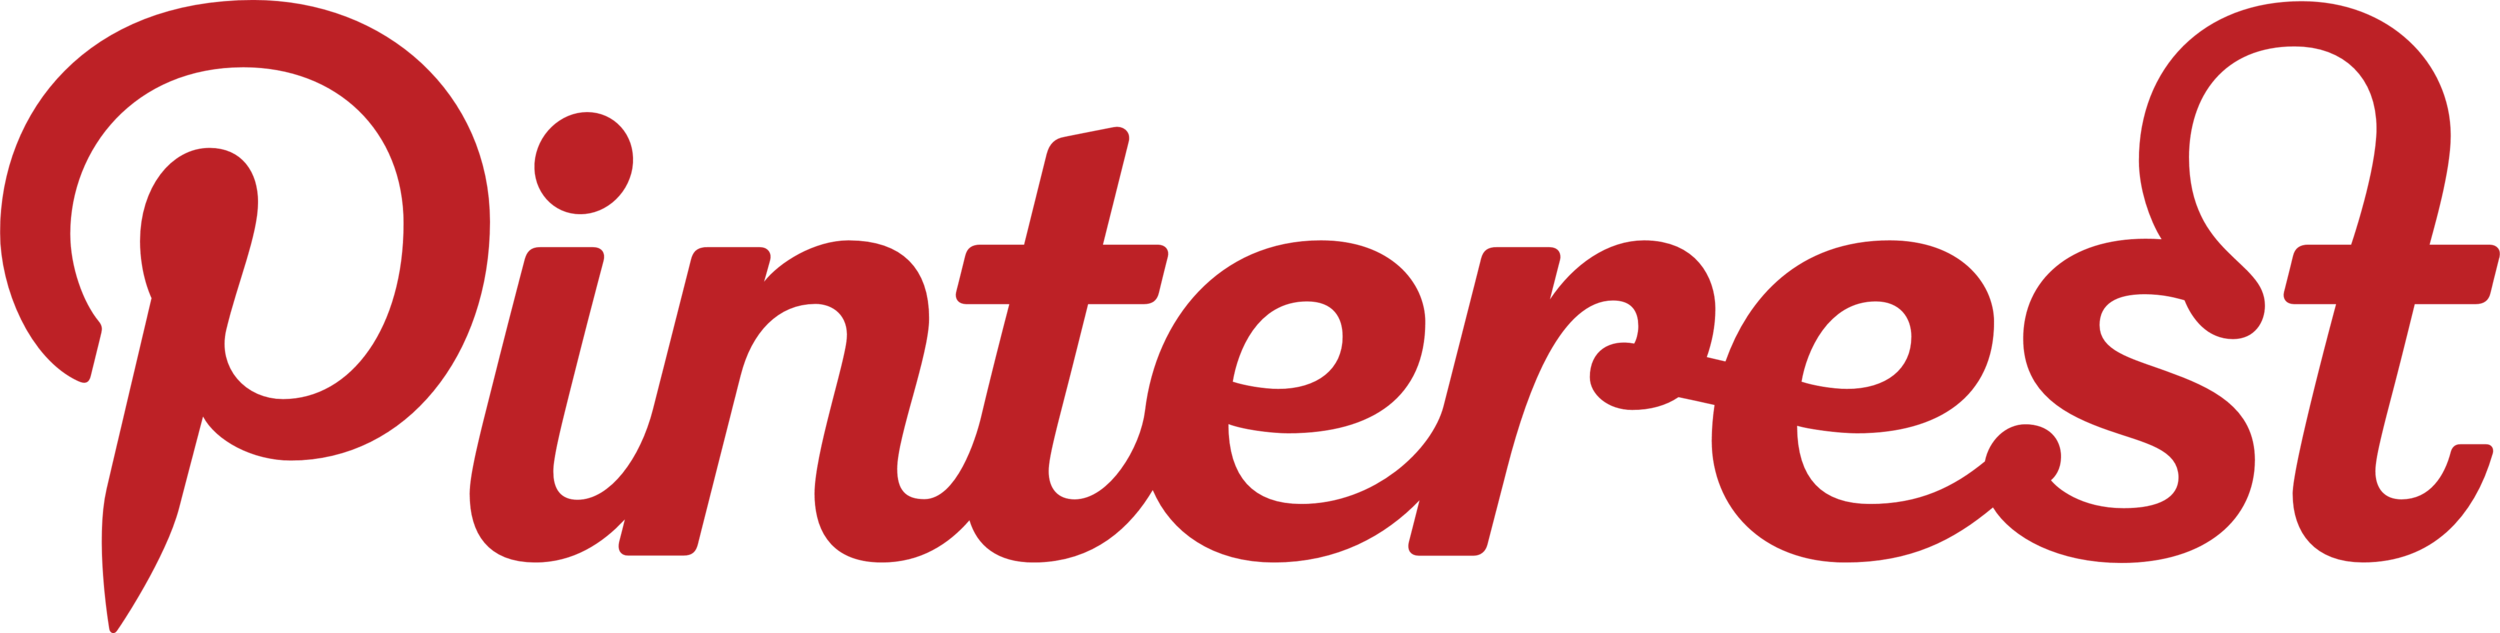 Pinterest_logo.png